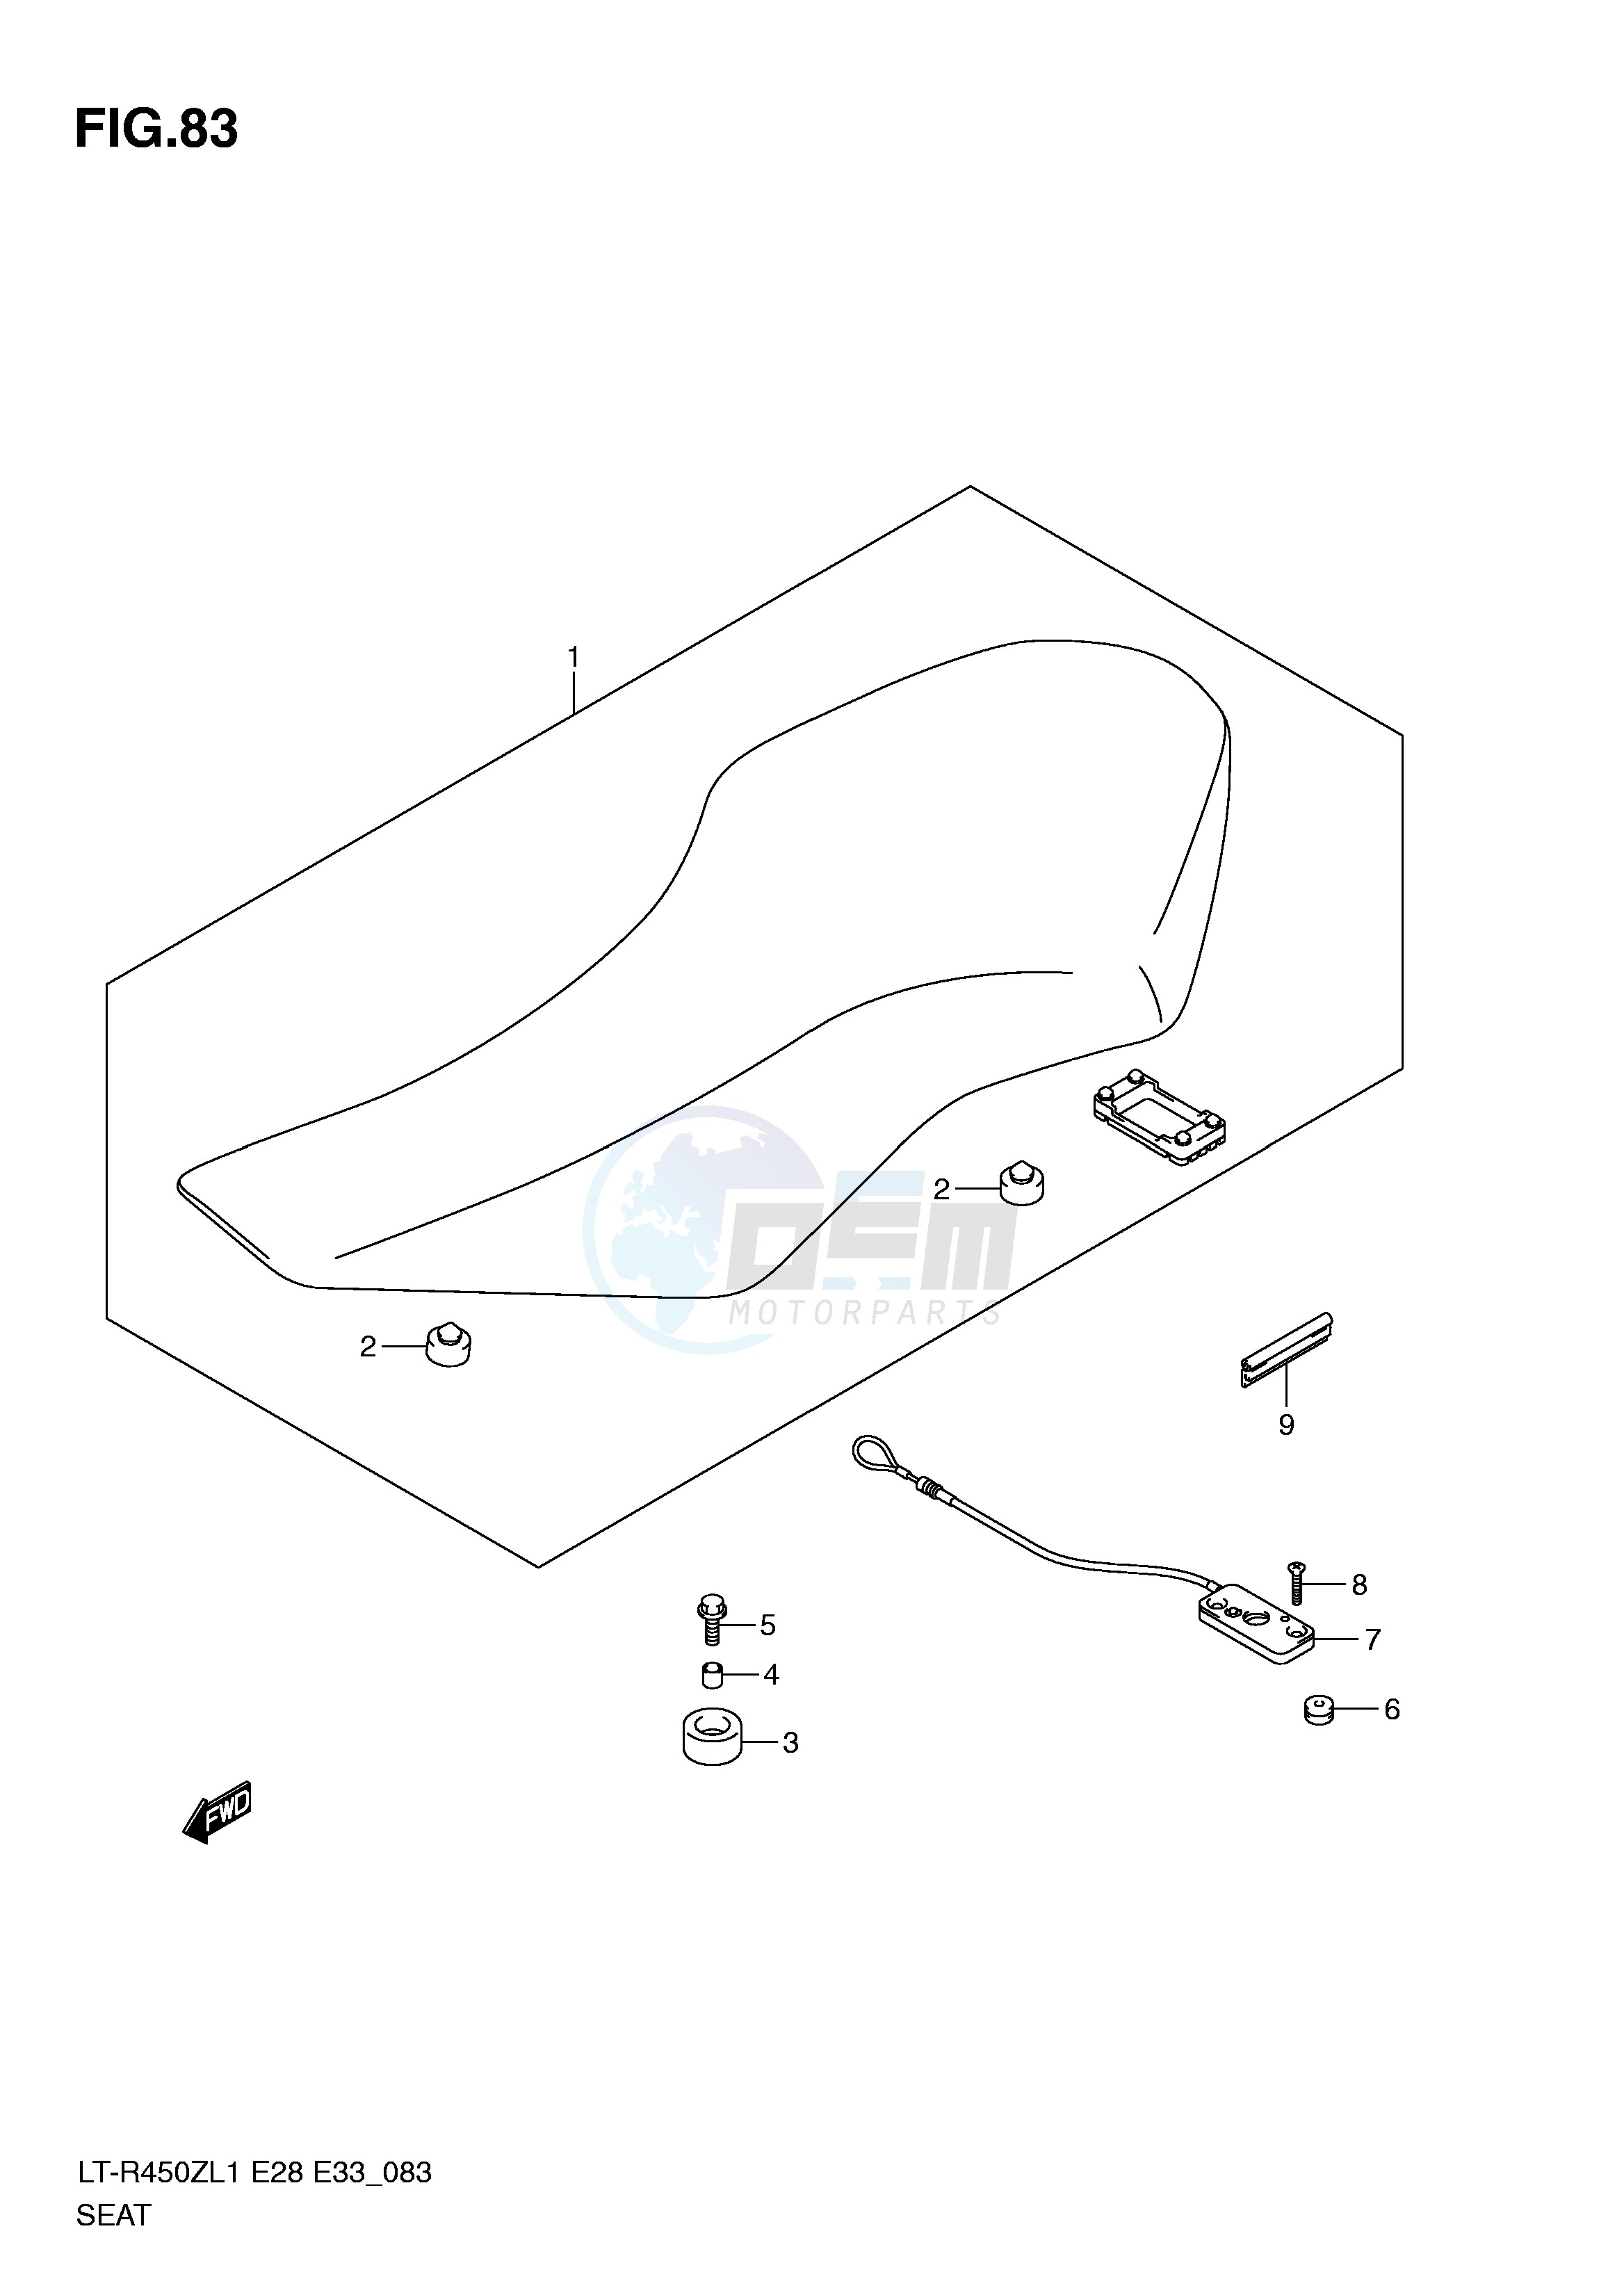 SEAT (LT-R450ZL1 E33) blueprint